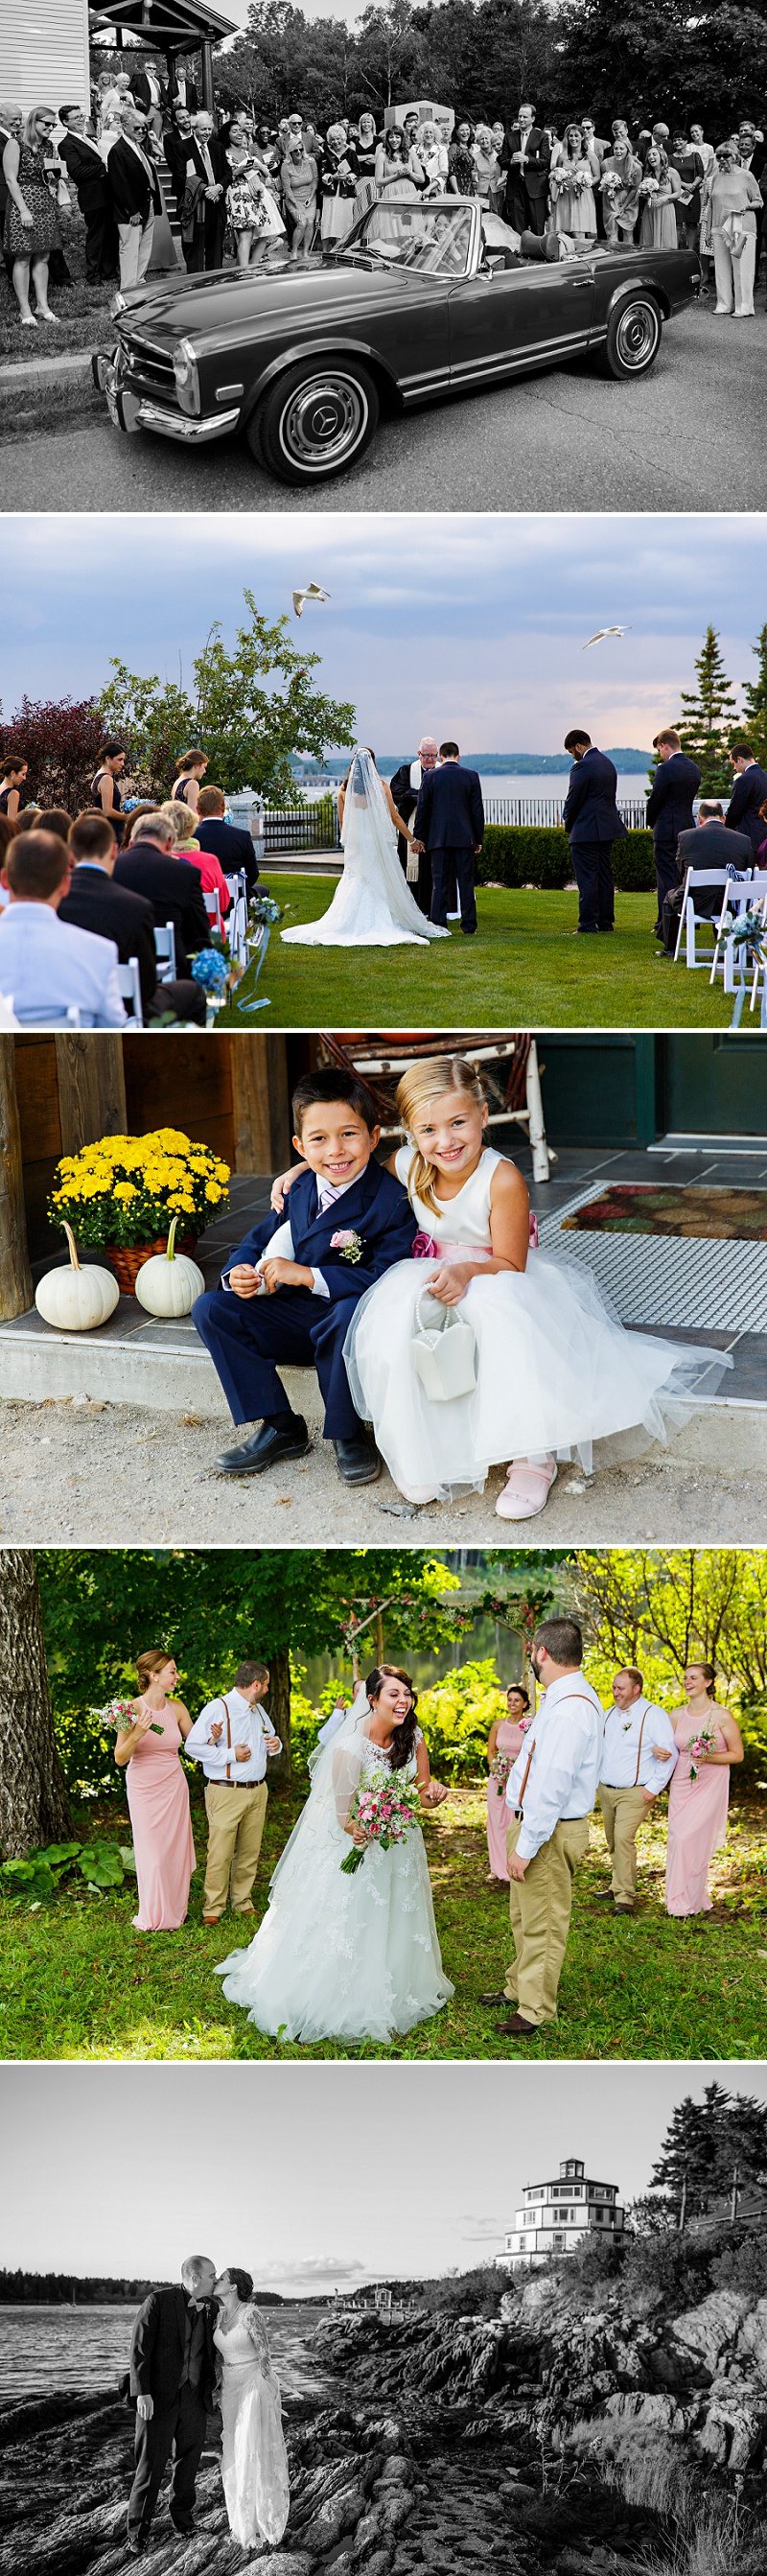 Best-wedding-photos-of-2015-0009